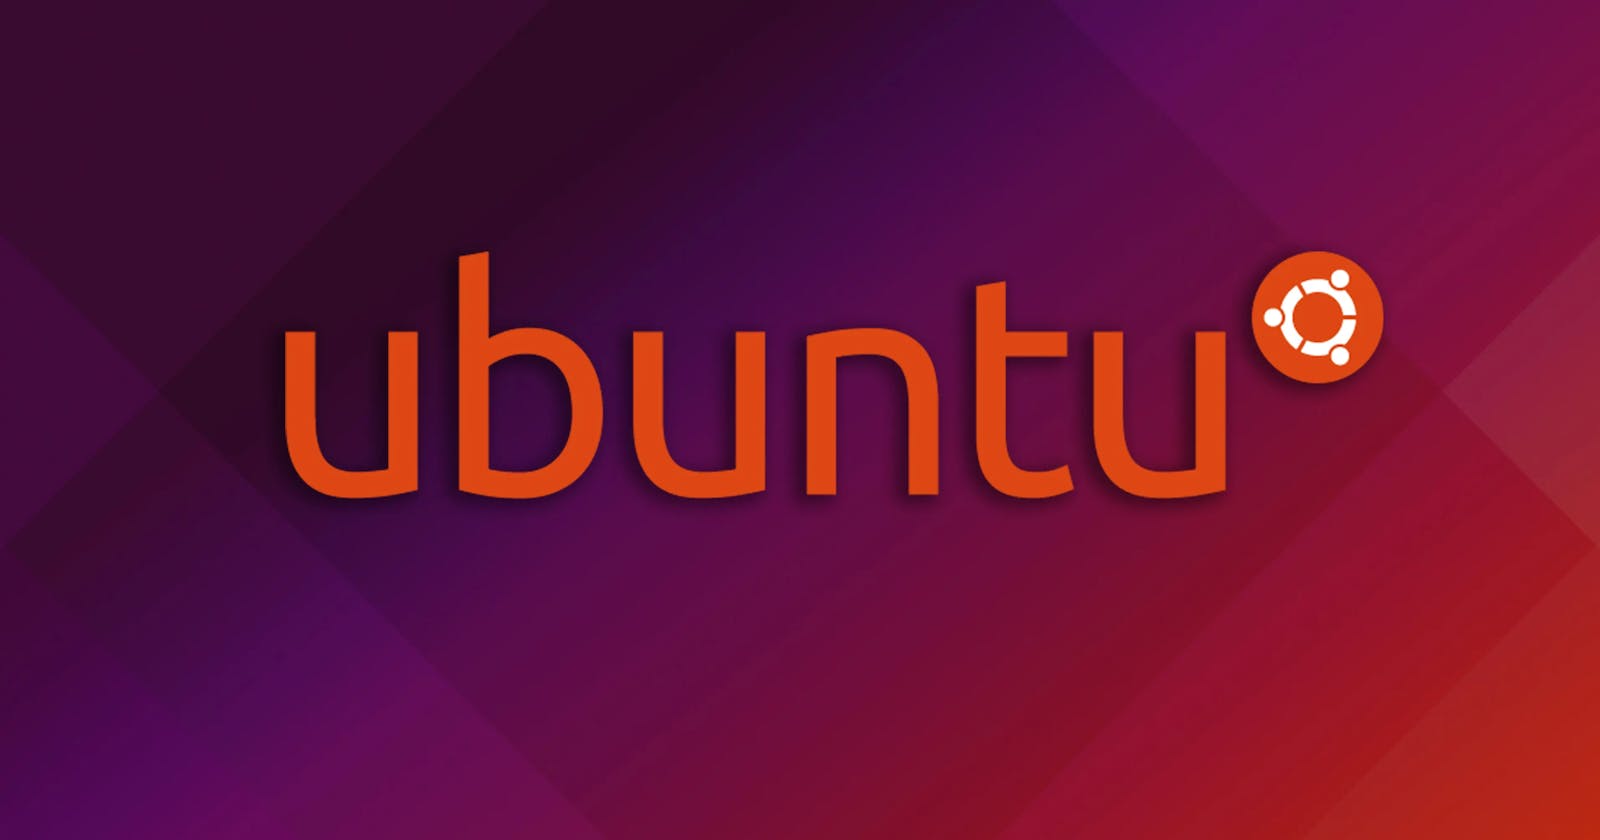 How to run .exe file in Linux [Ubuntu]